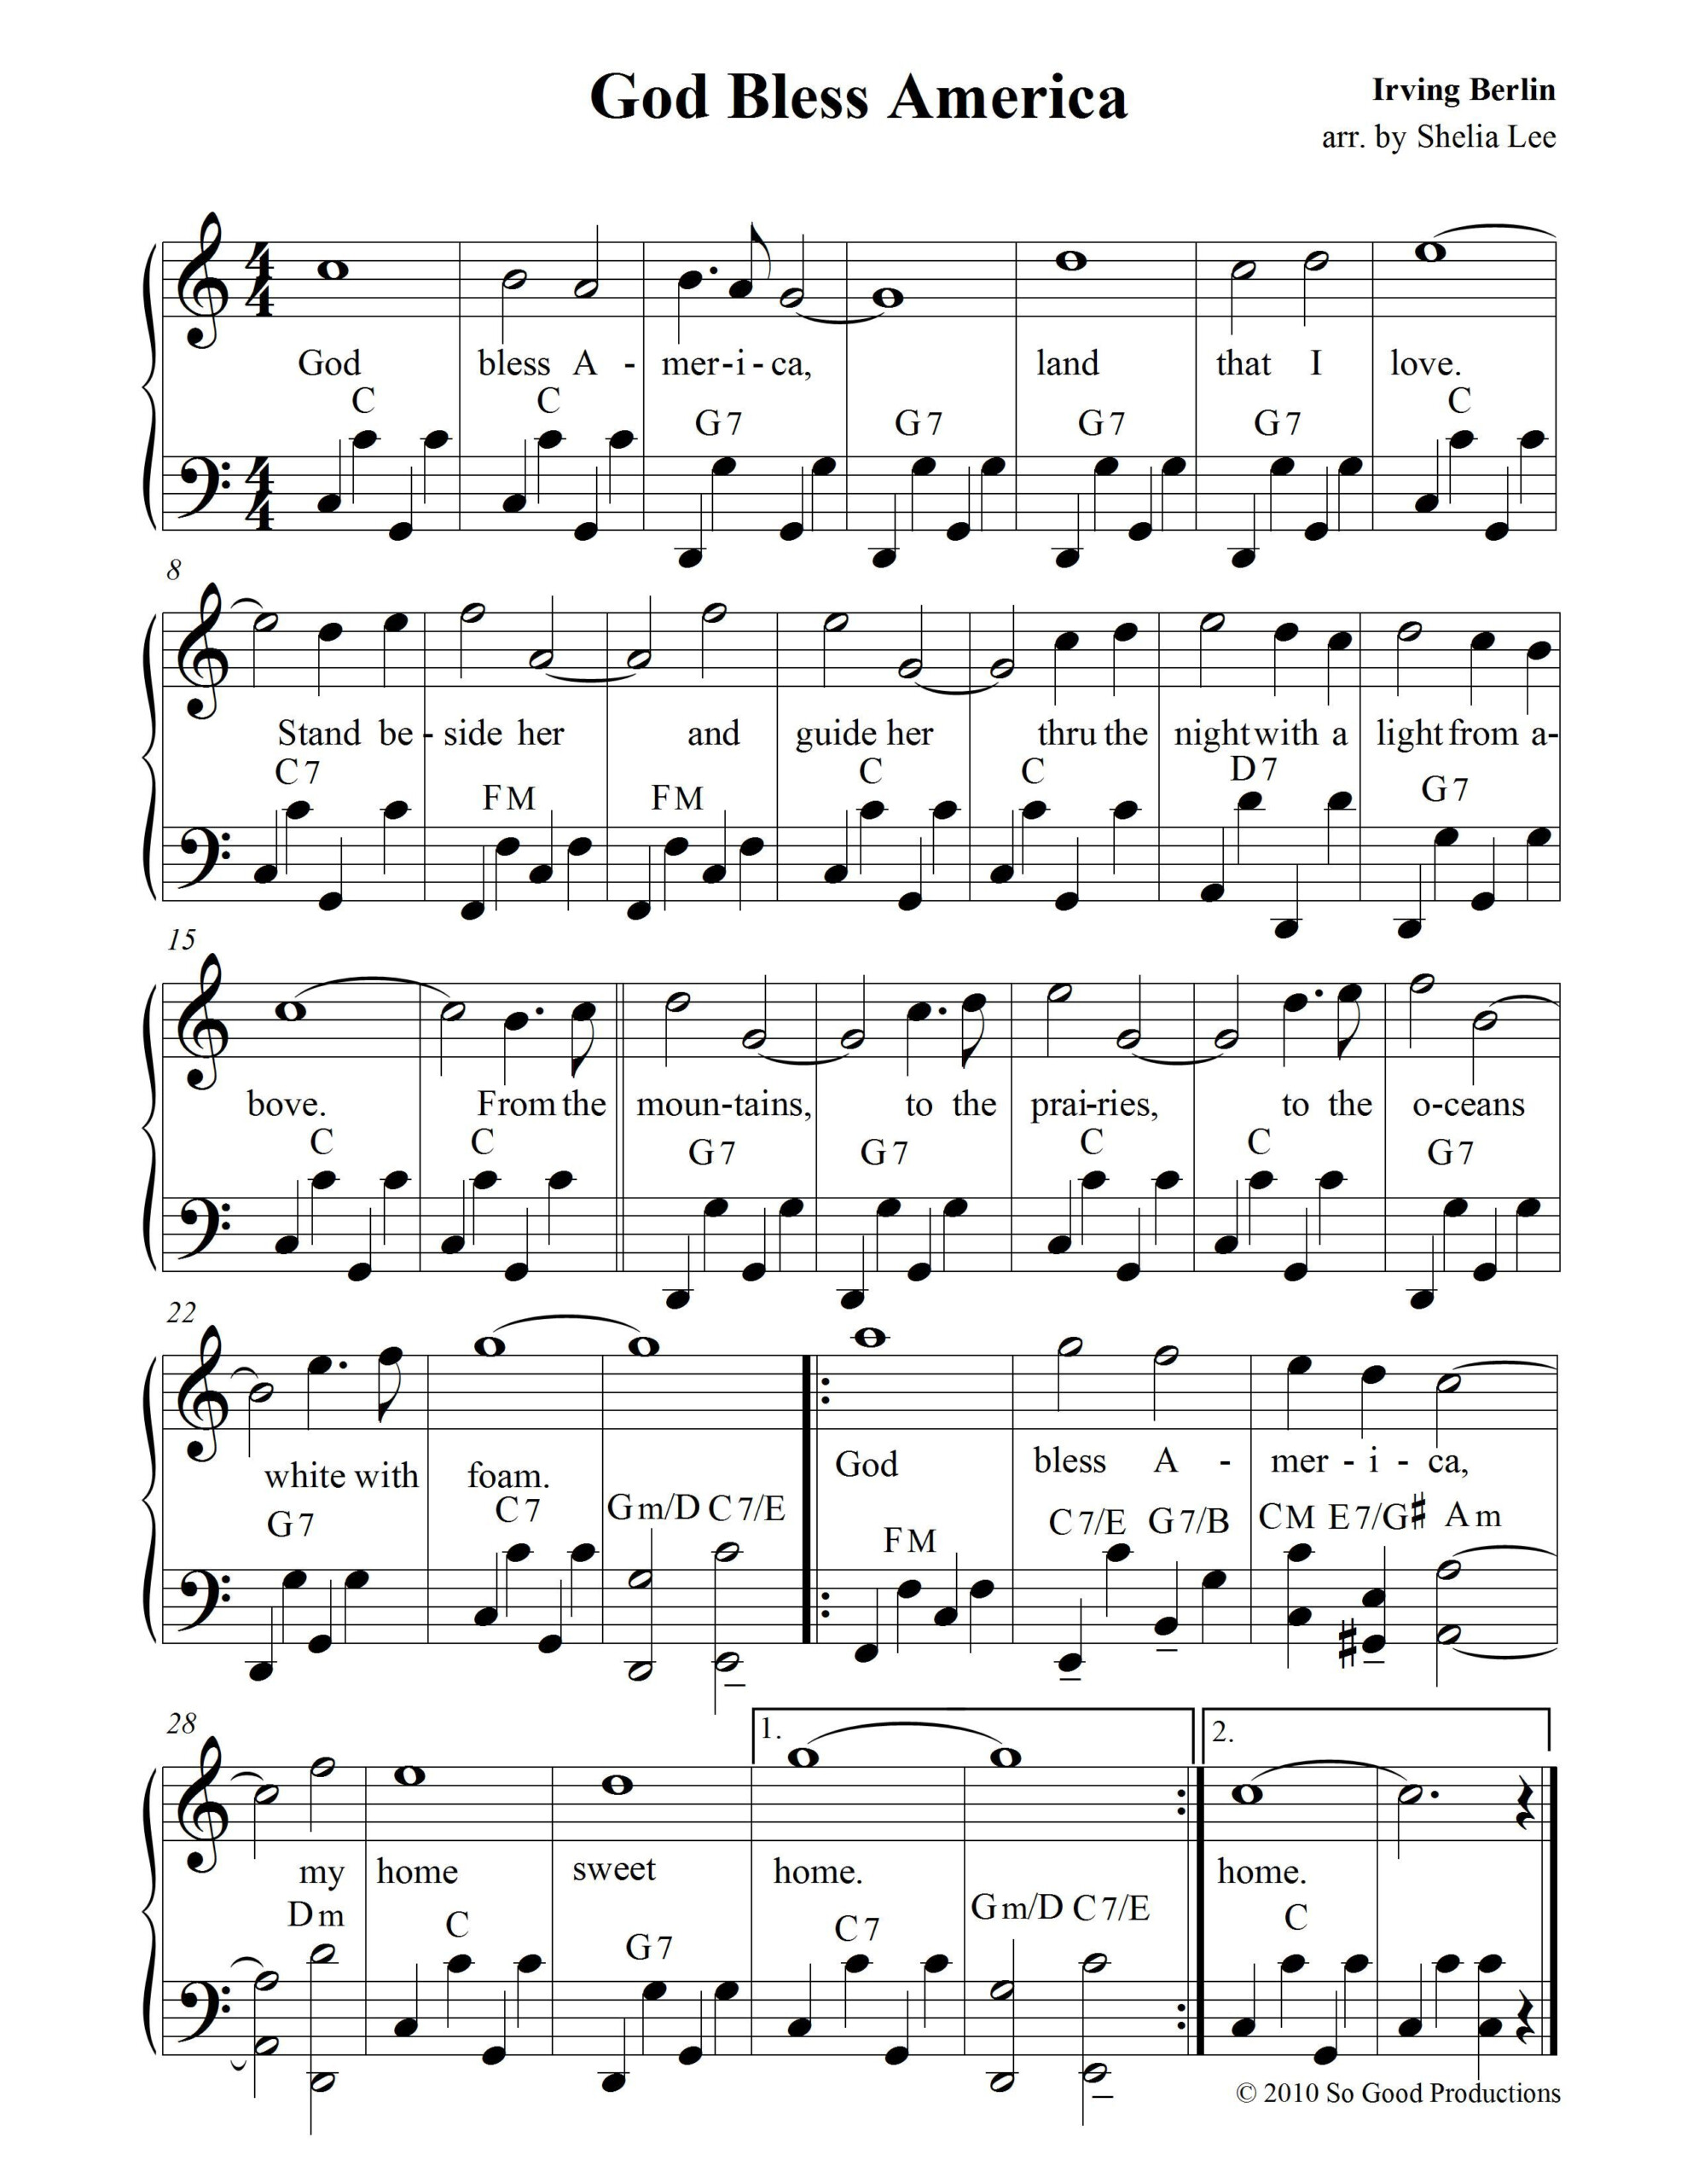 God Bless America Sheet Music Free Pdf Google Search Hymn Music